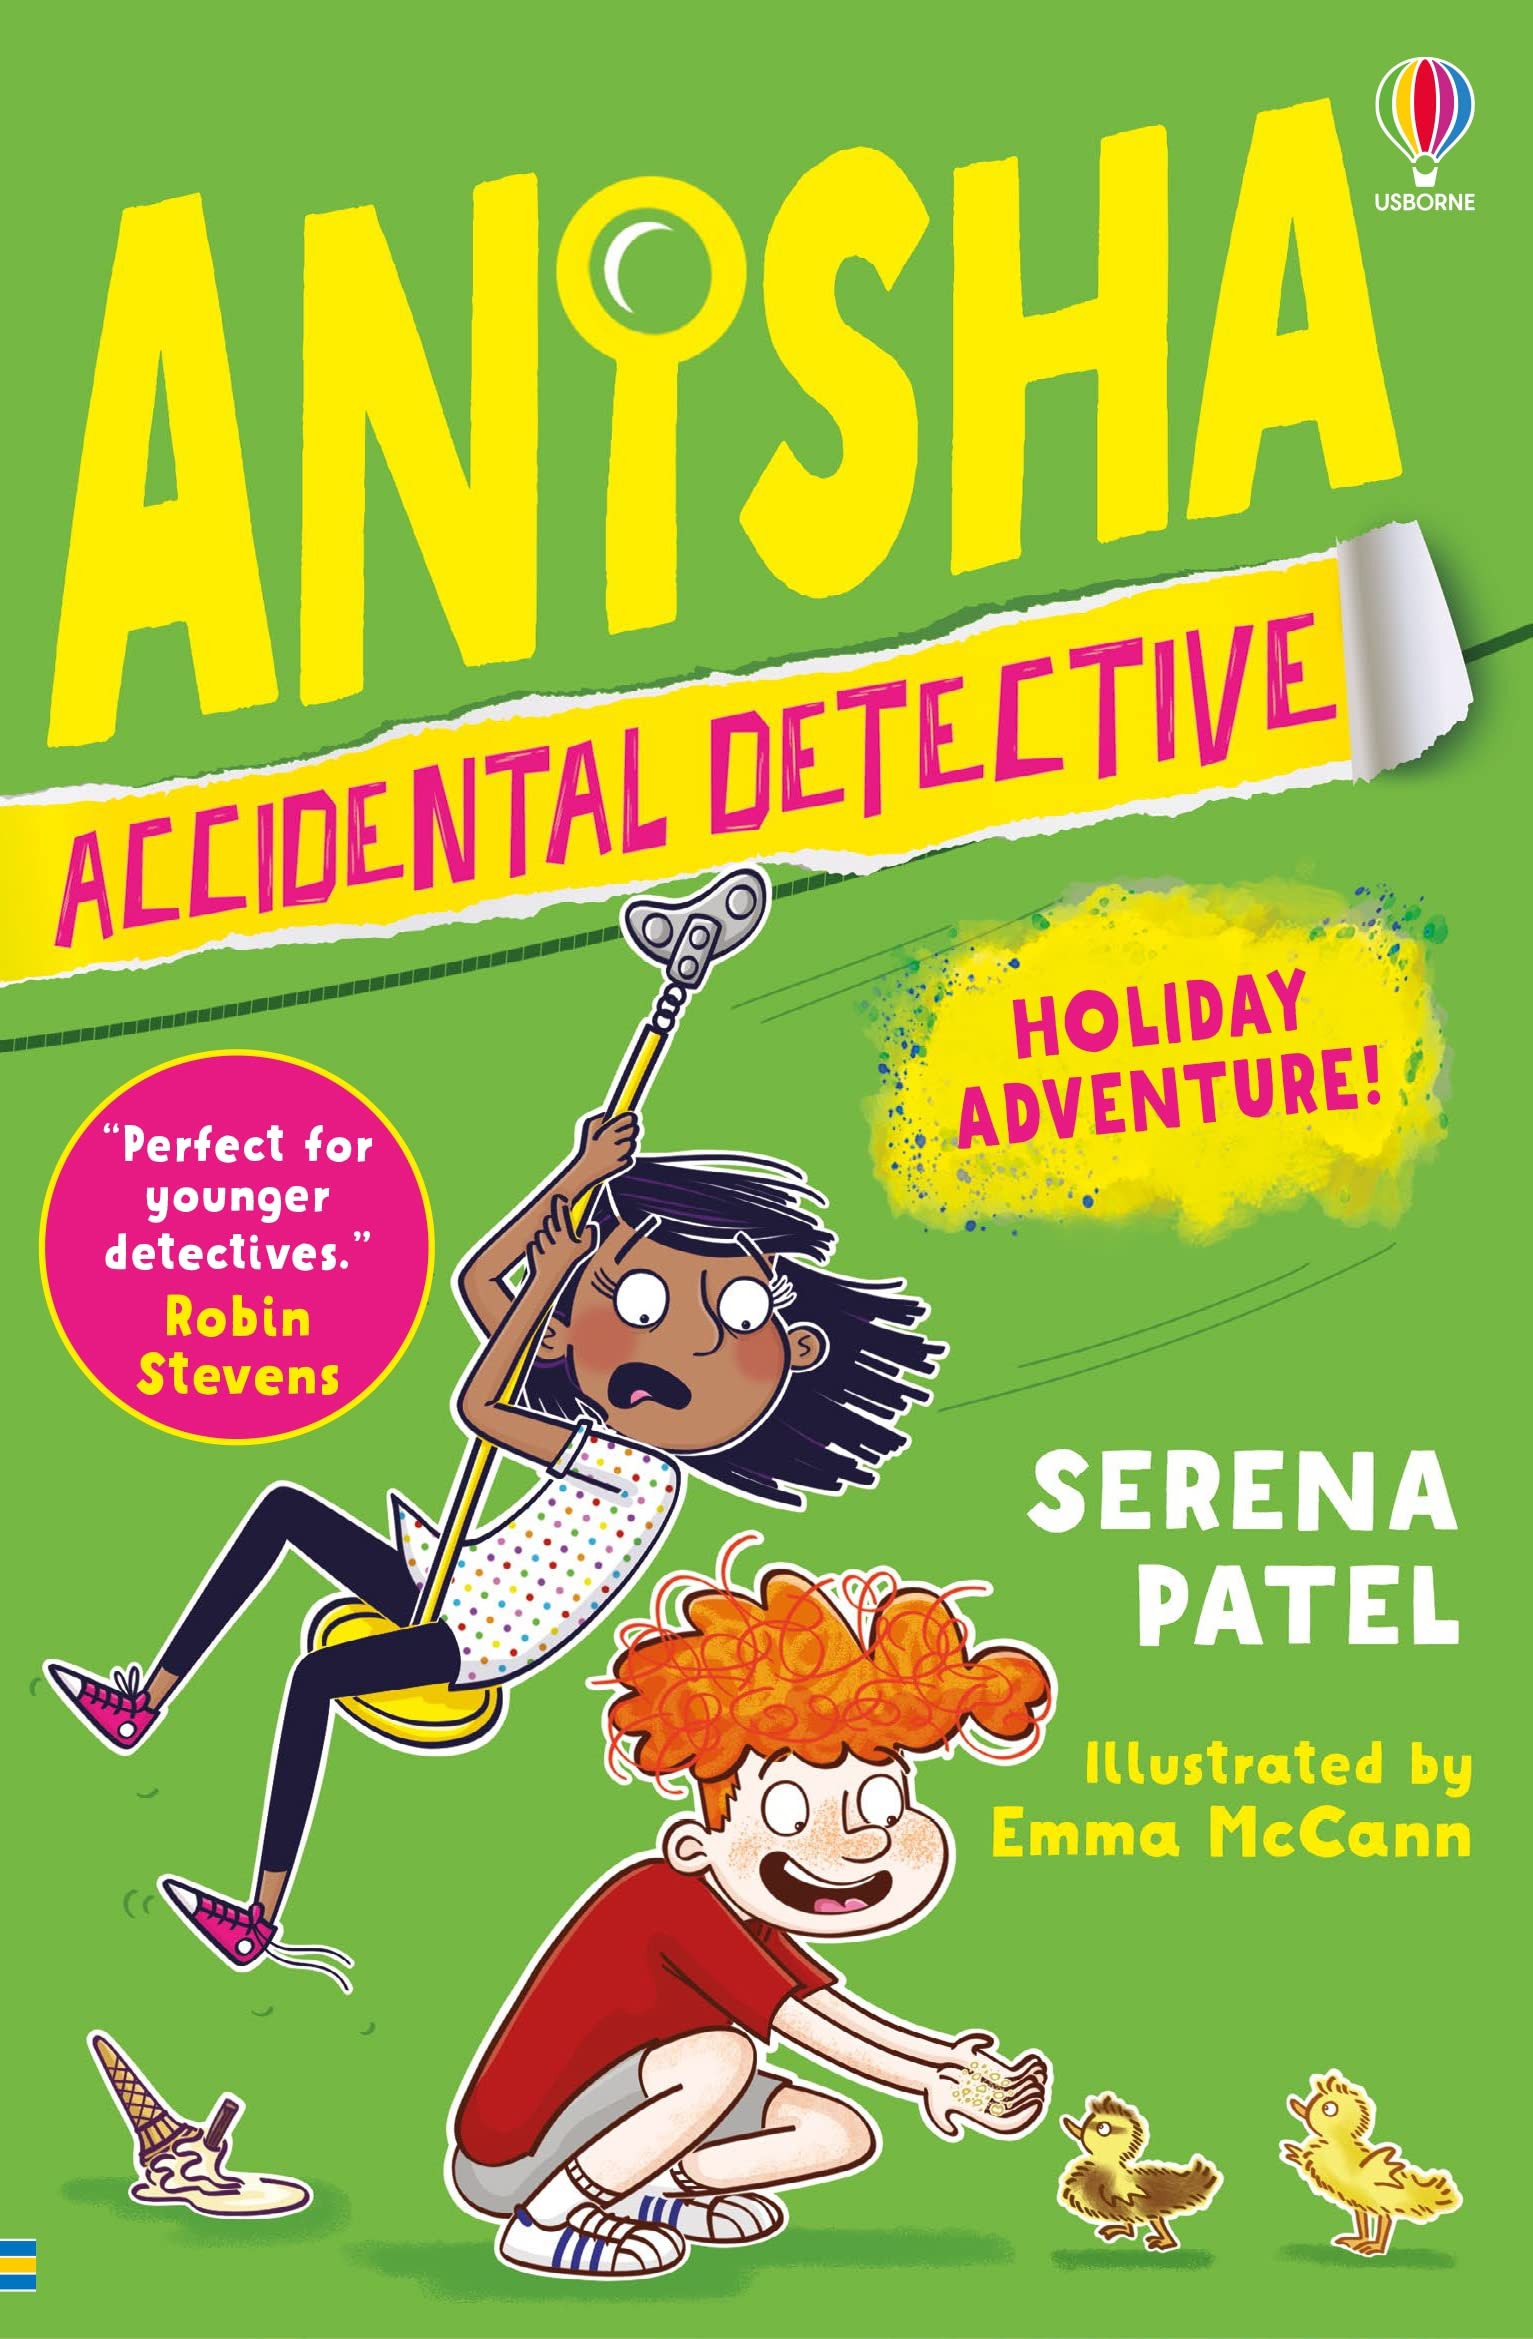 Anisha Accidental Detective: Holiday Adventure